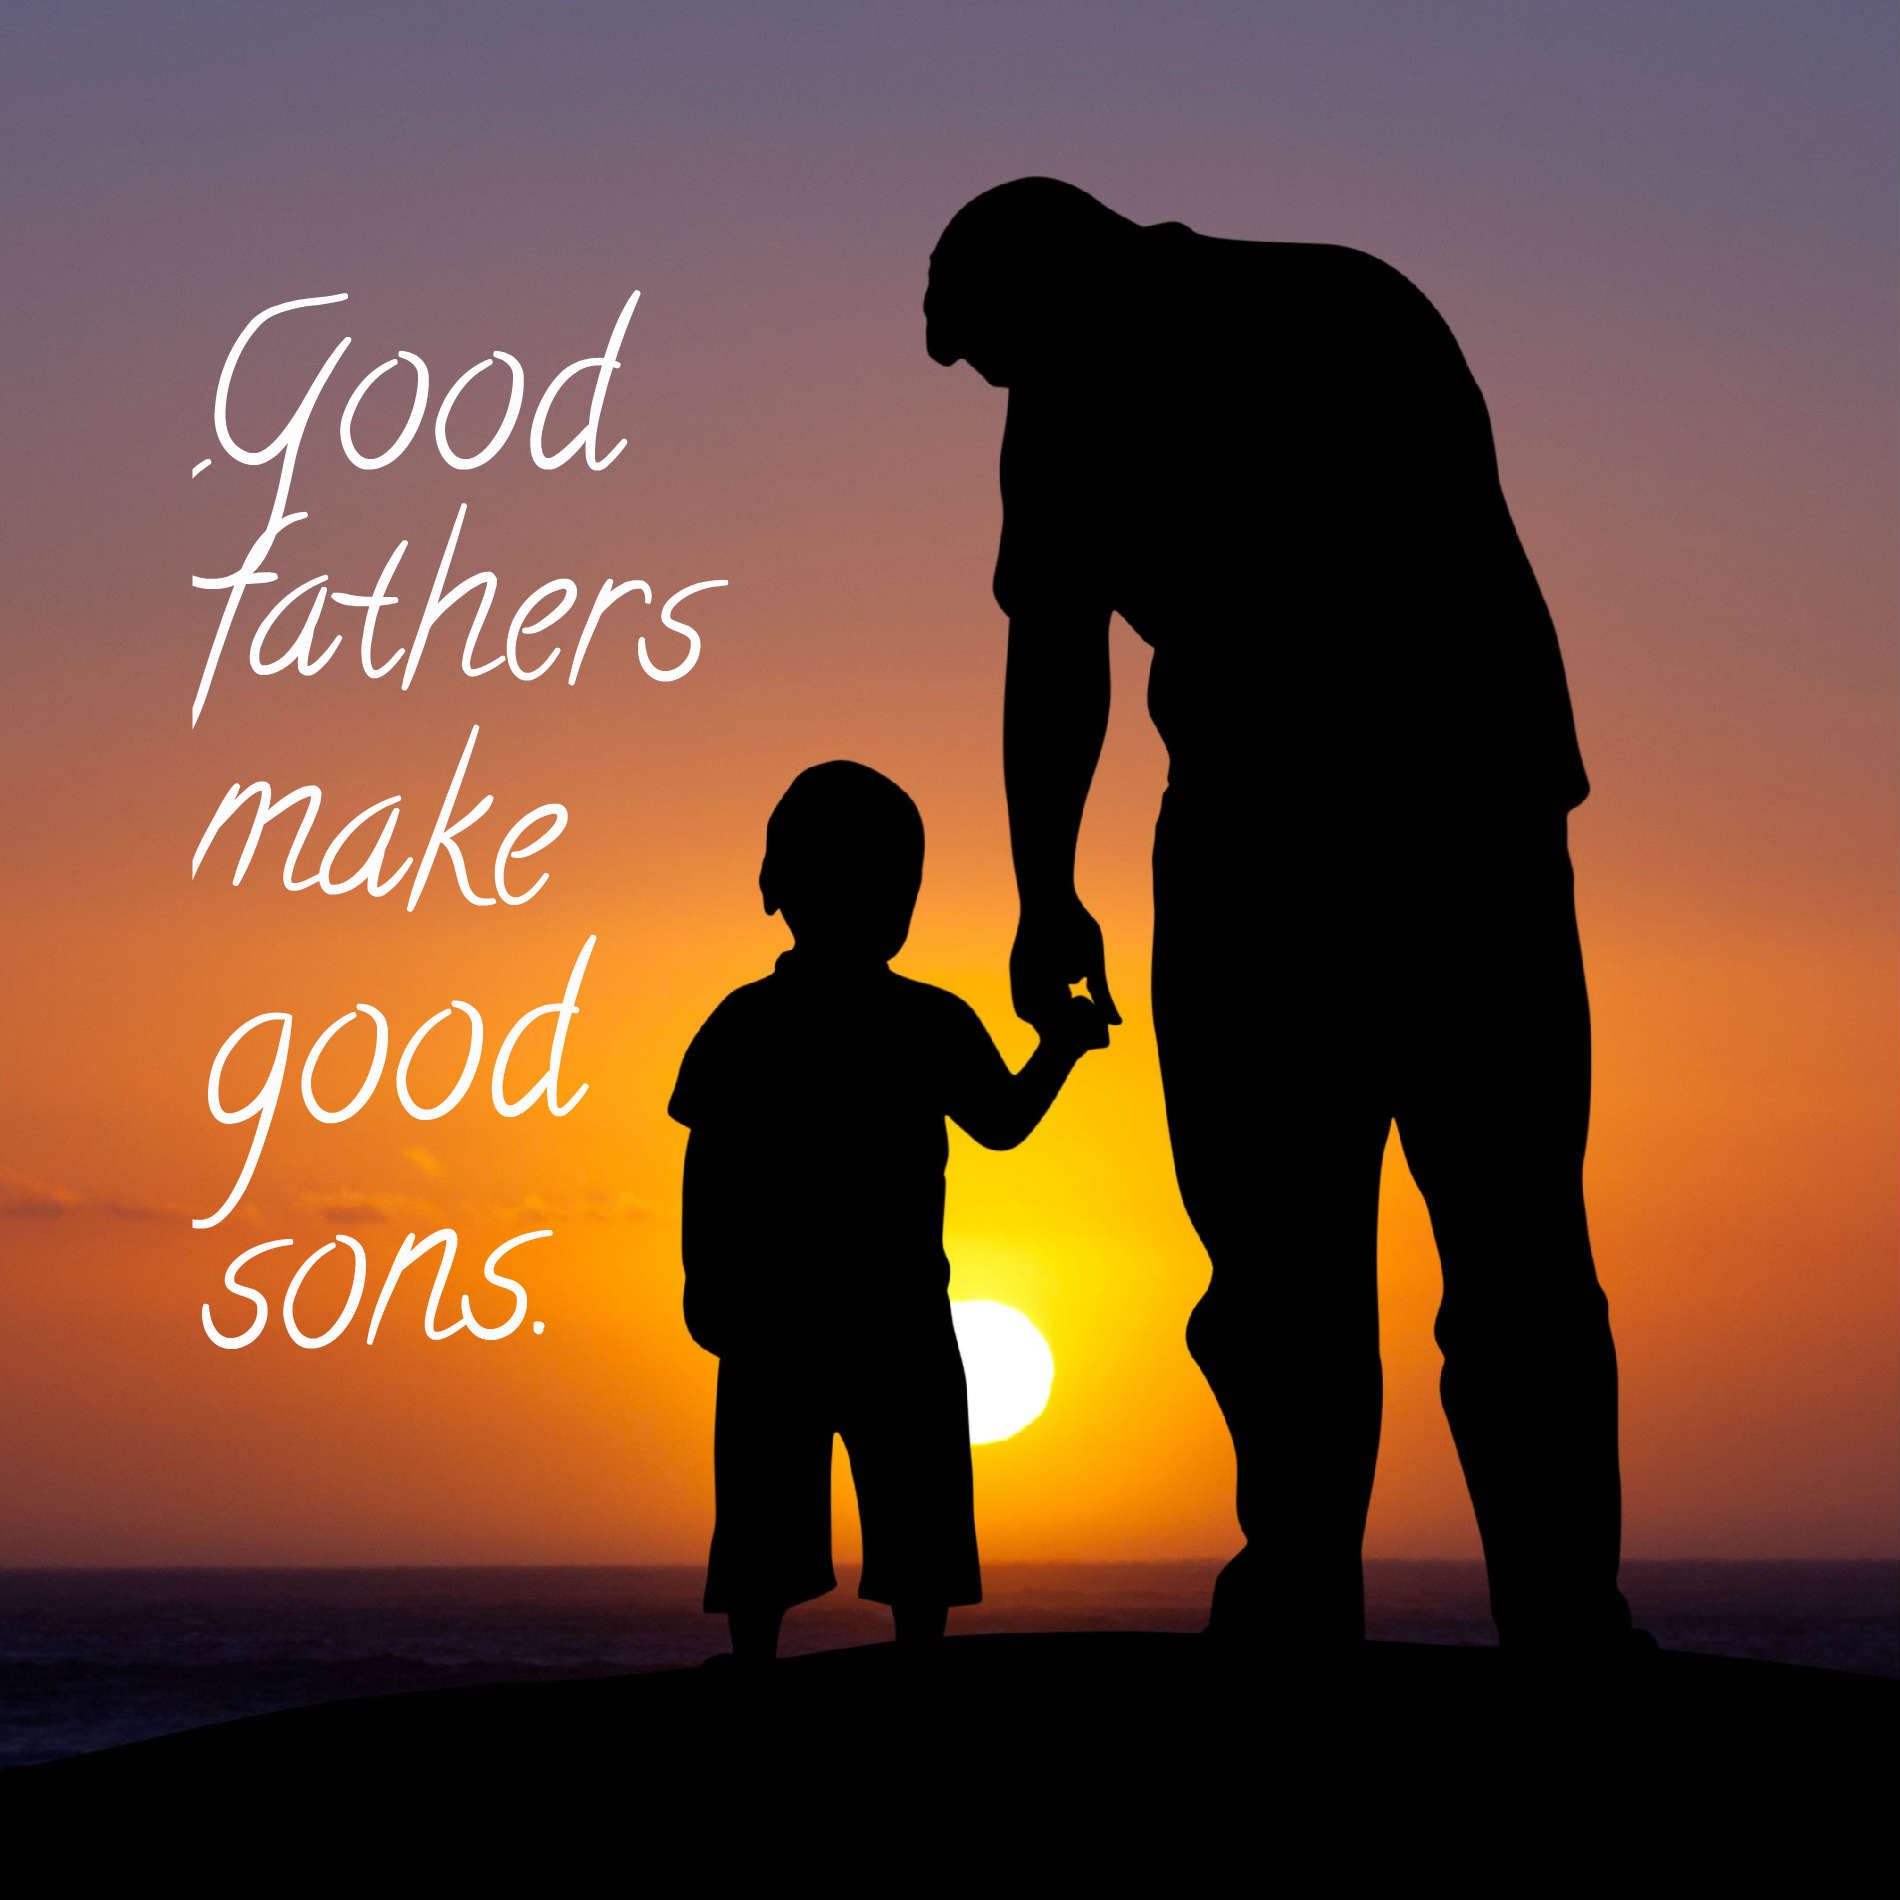 Good fathers make good sons.